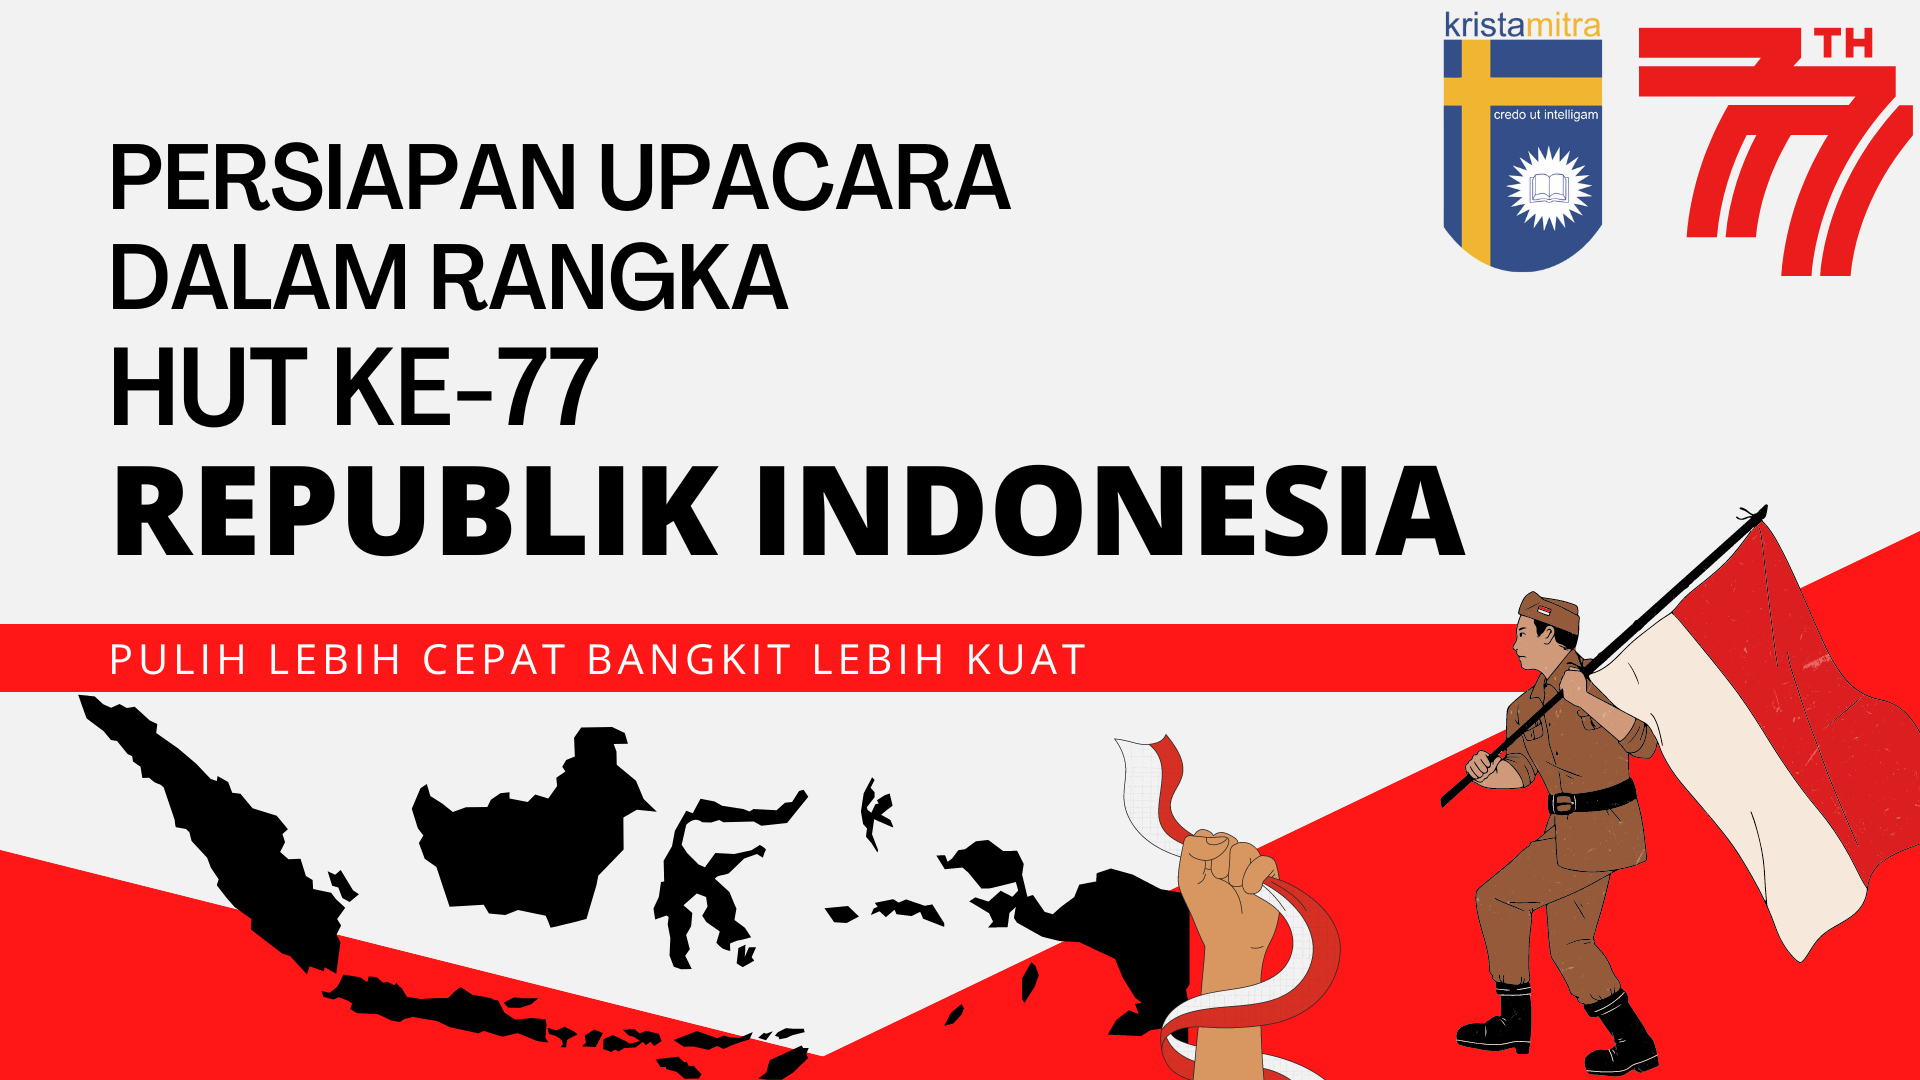 Persiapan Upacara dalam Rangka HUT ke-77 Republik Indonesia